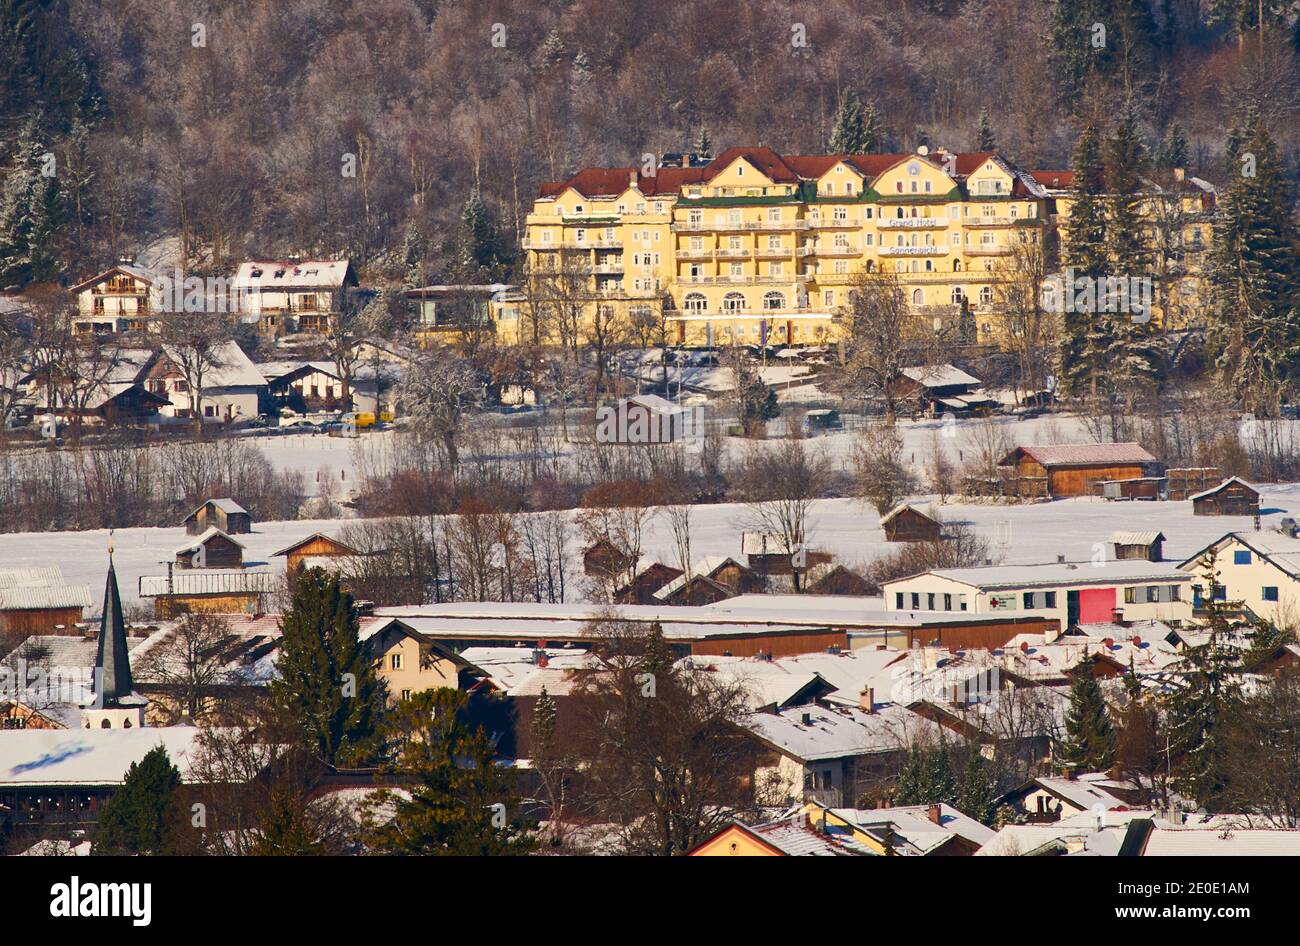 Grand Hotel Sonnenbichl di lusso a Garmisch-Partenkirchen, residenza a tempo parziale del Re di Thailandia Maha Vajiralongkorn a Garmisch-Partenkirchen, Baviera, Germania, 31 dicembre 2020. © Peter Schatz / Alamy Live News Foto Stock